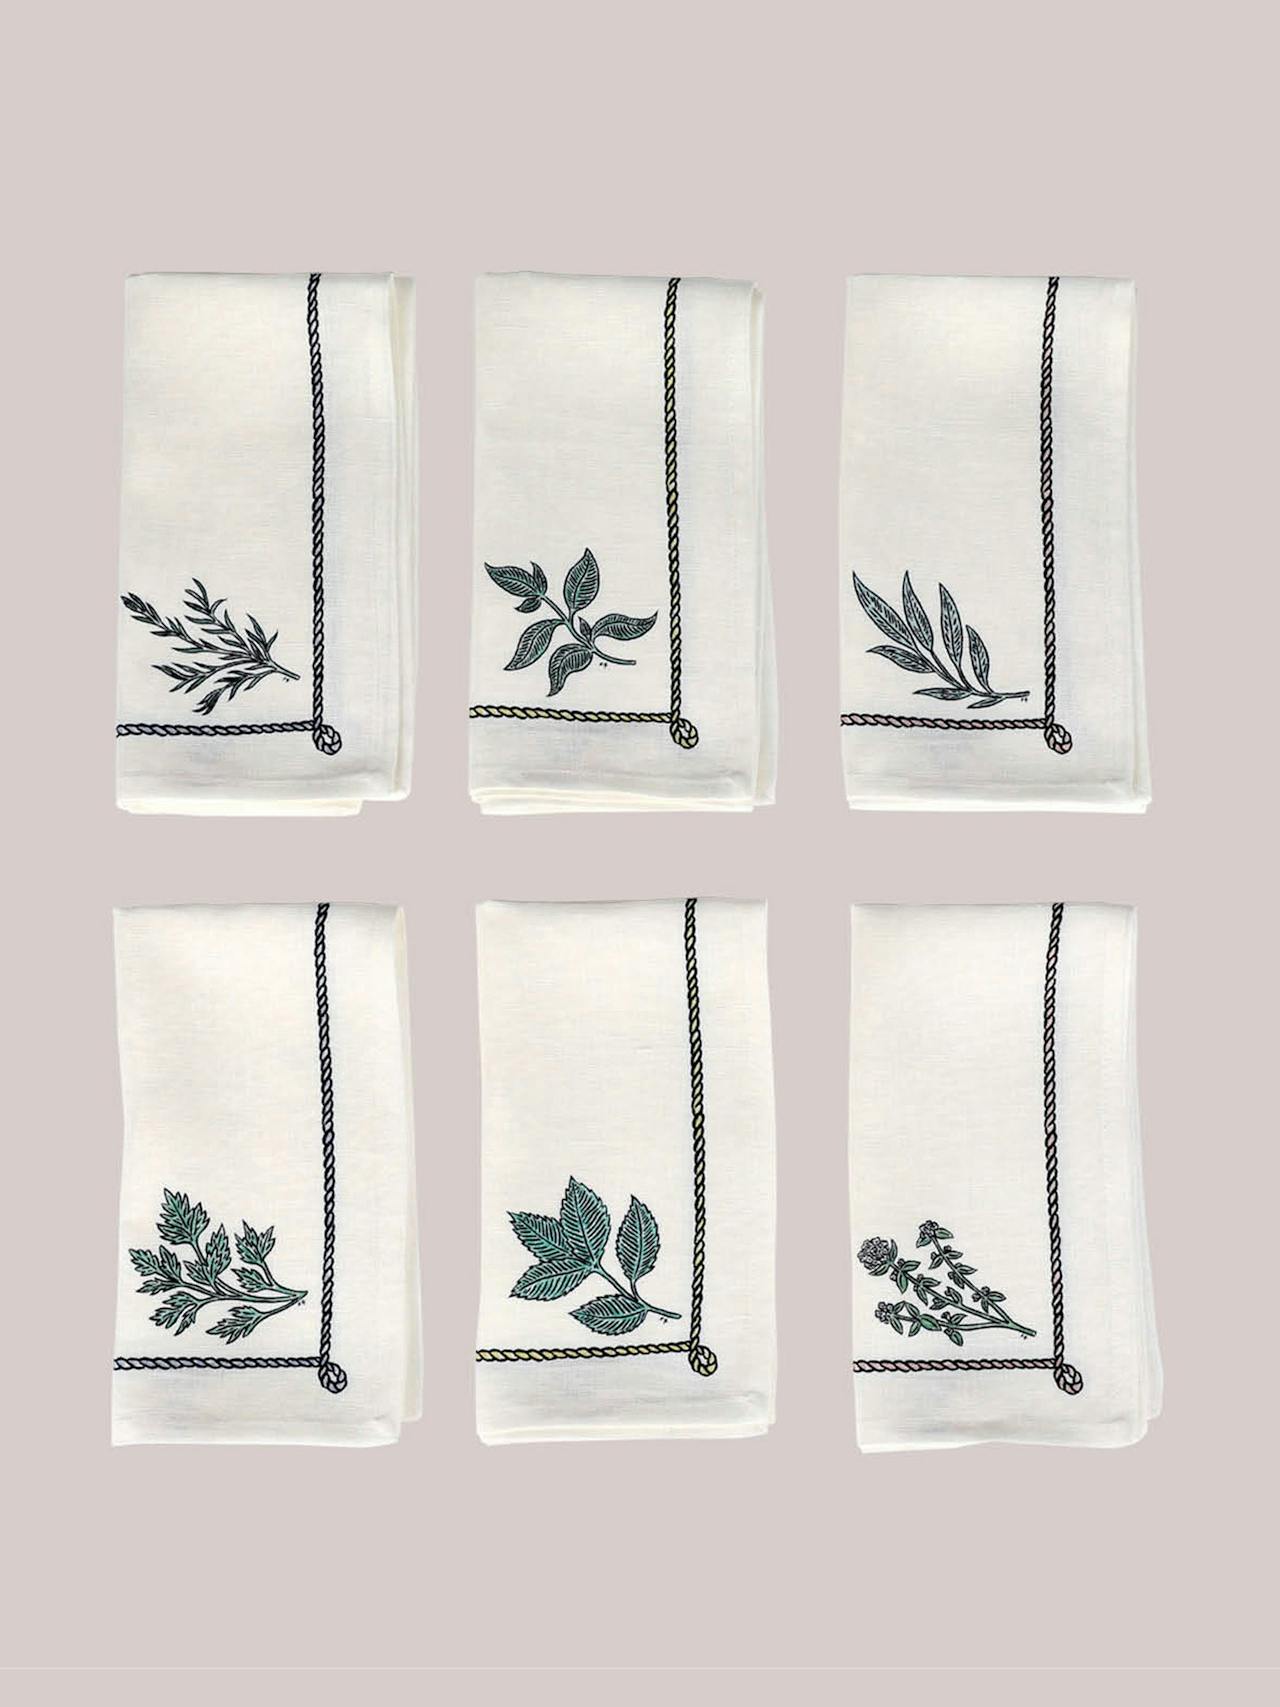 Polkra x Fee Greening set of 6 garden herbs collection linen napkins